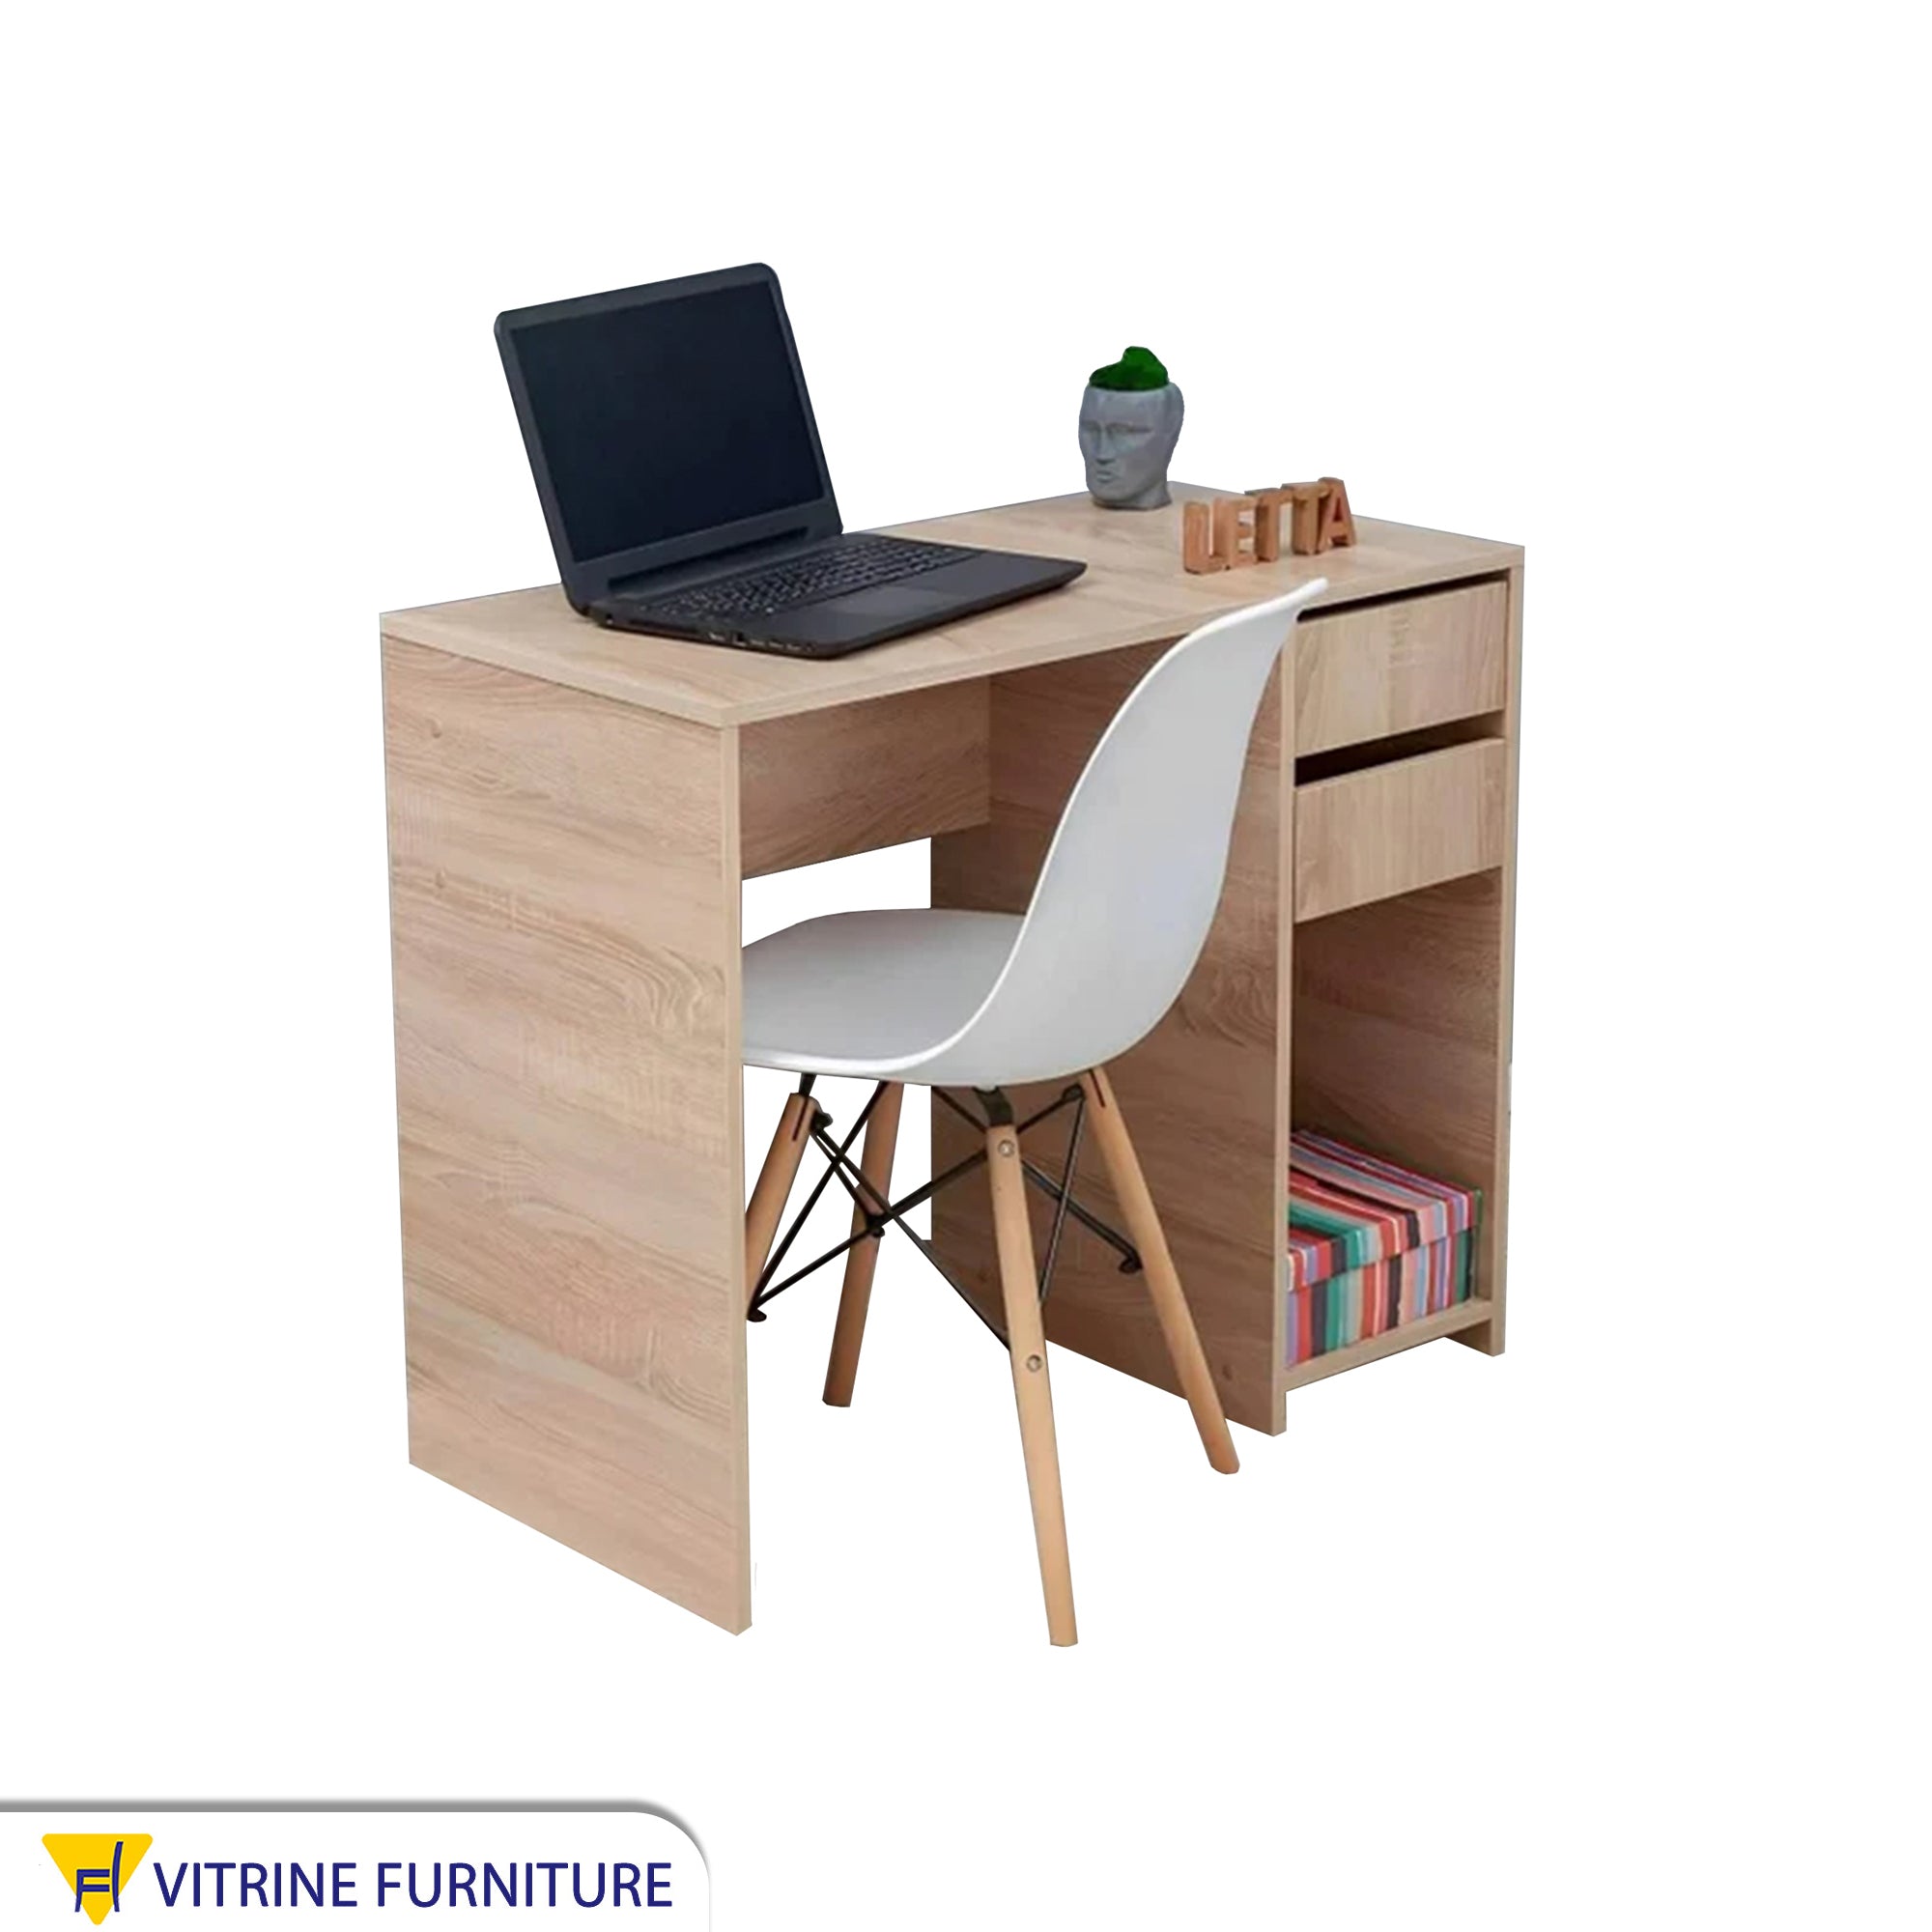 Study desk in brown wood color